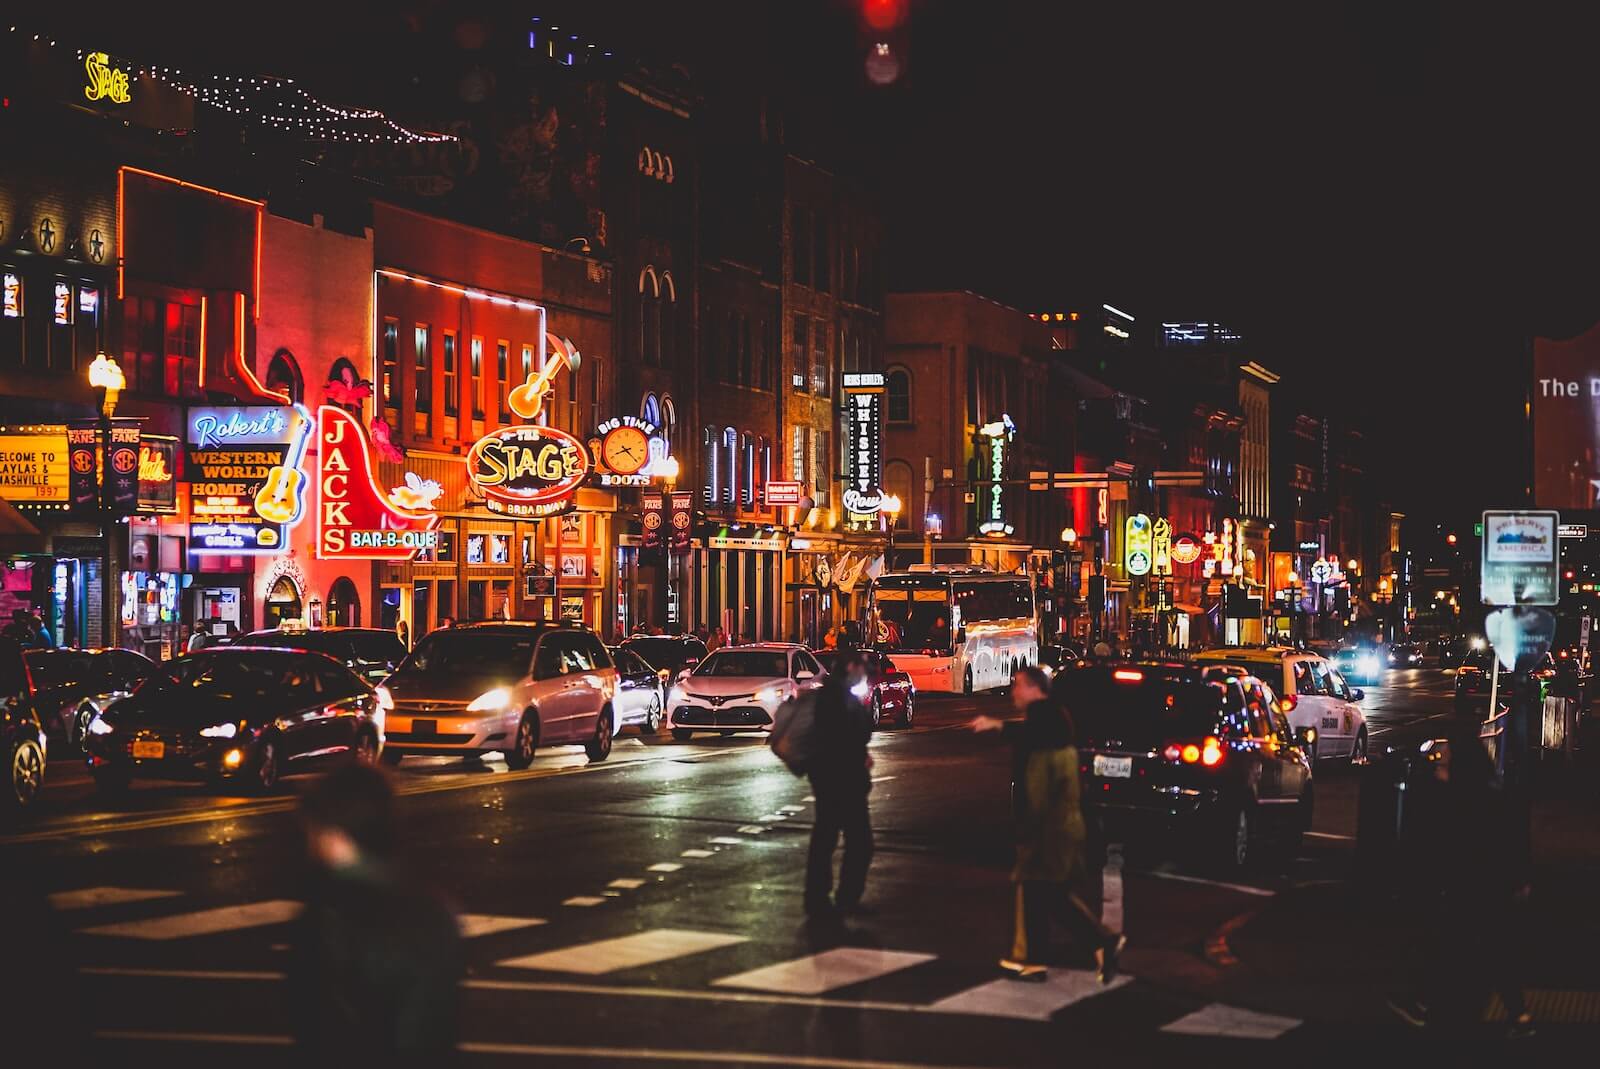 Downtown Nashville bars lit up at night